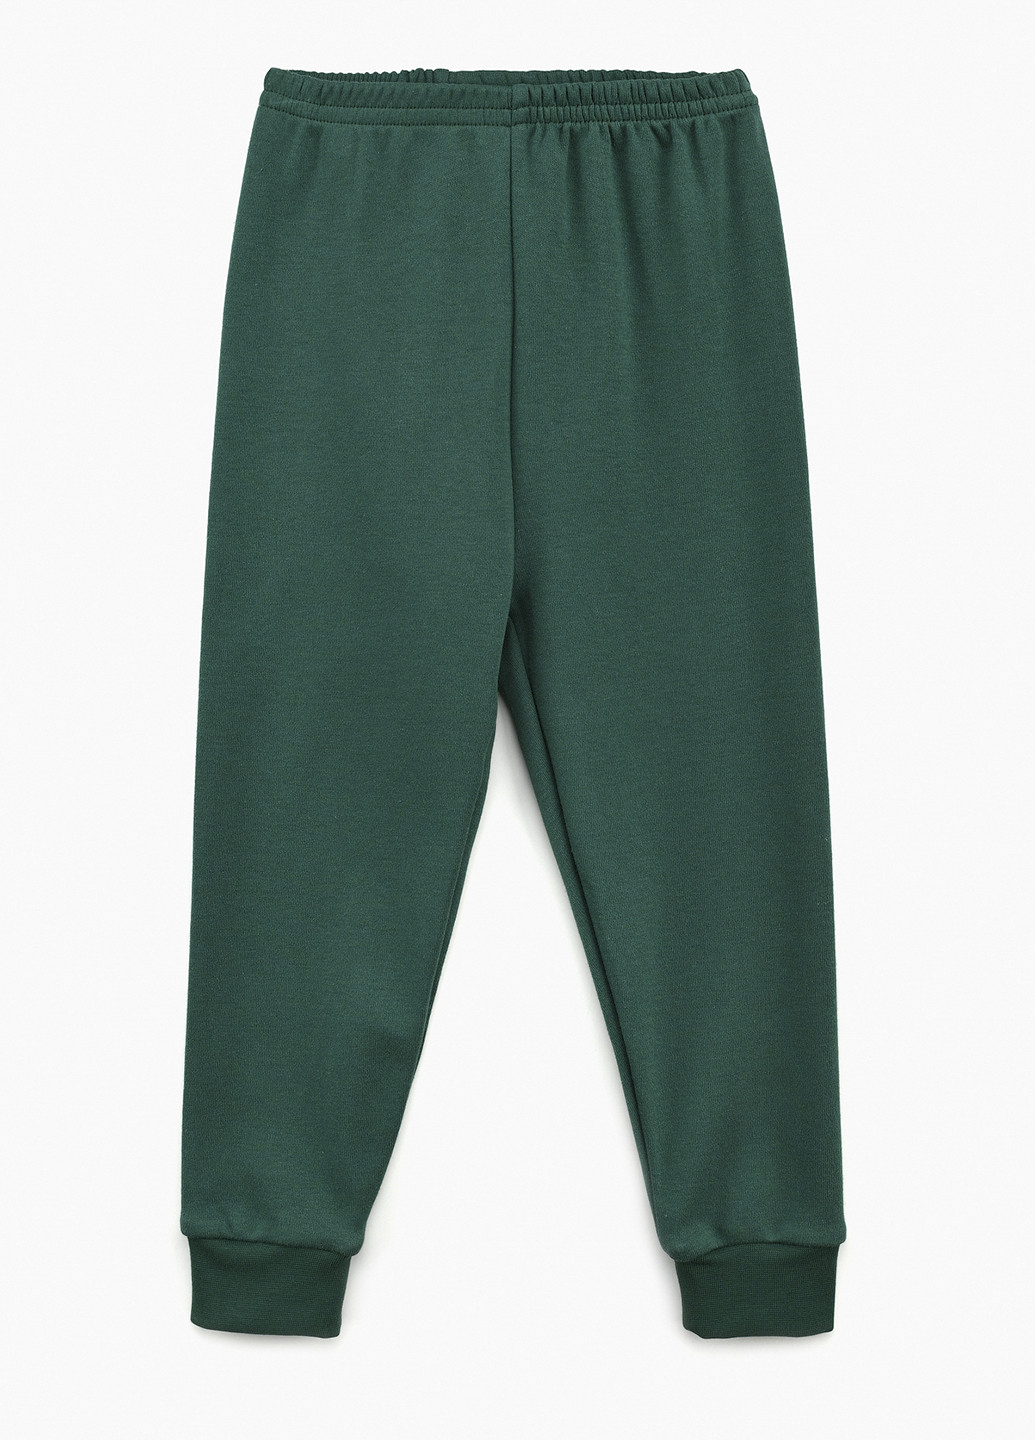 Комбинированная всесезон пижама (свитшот, брюки) свитшот + брюки Kazan